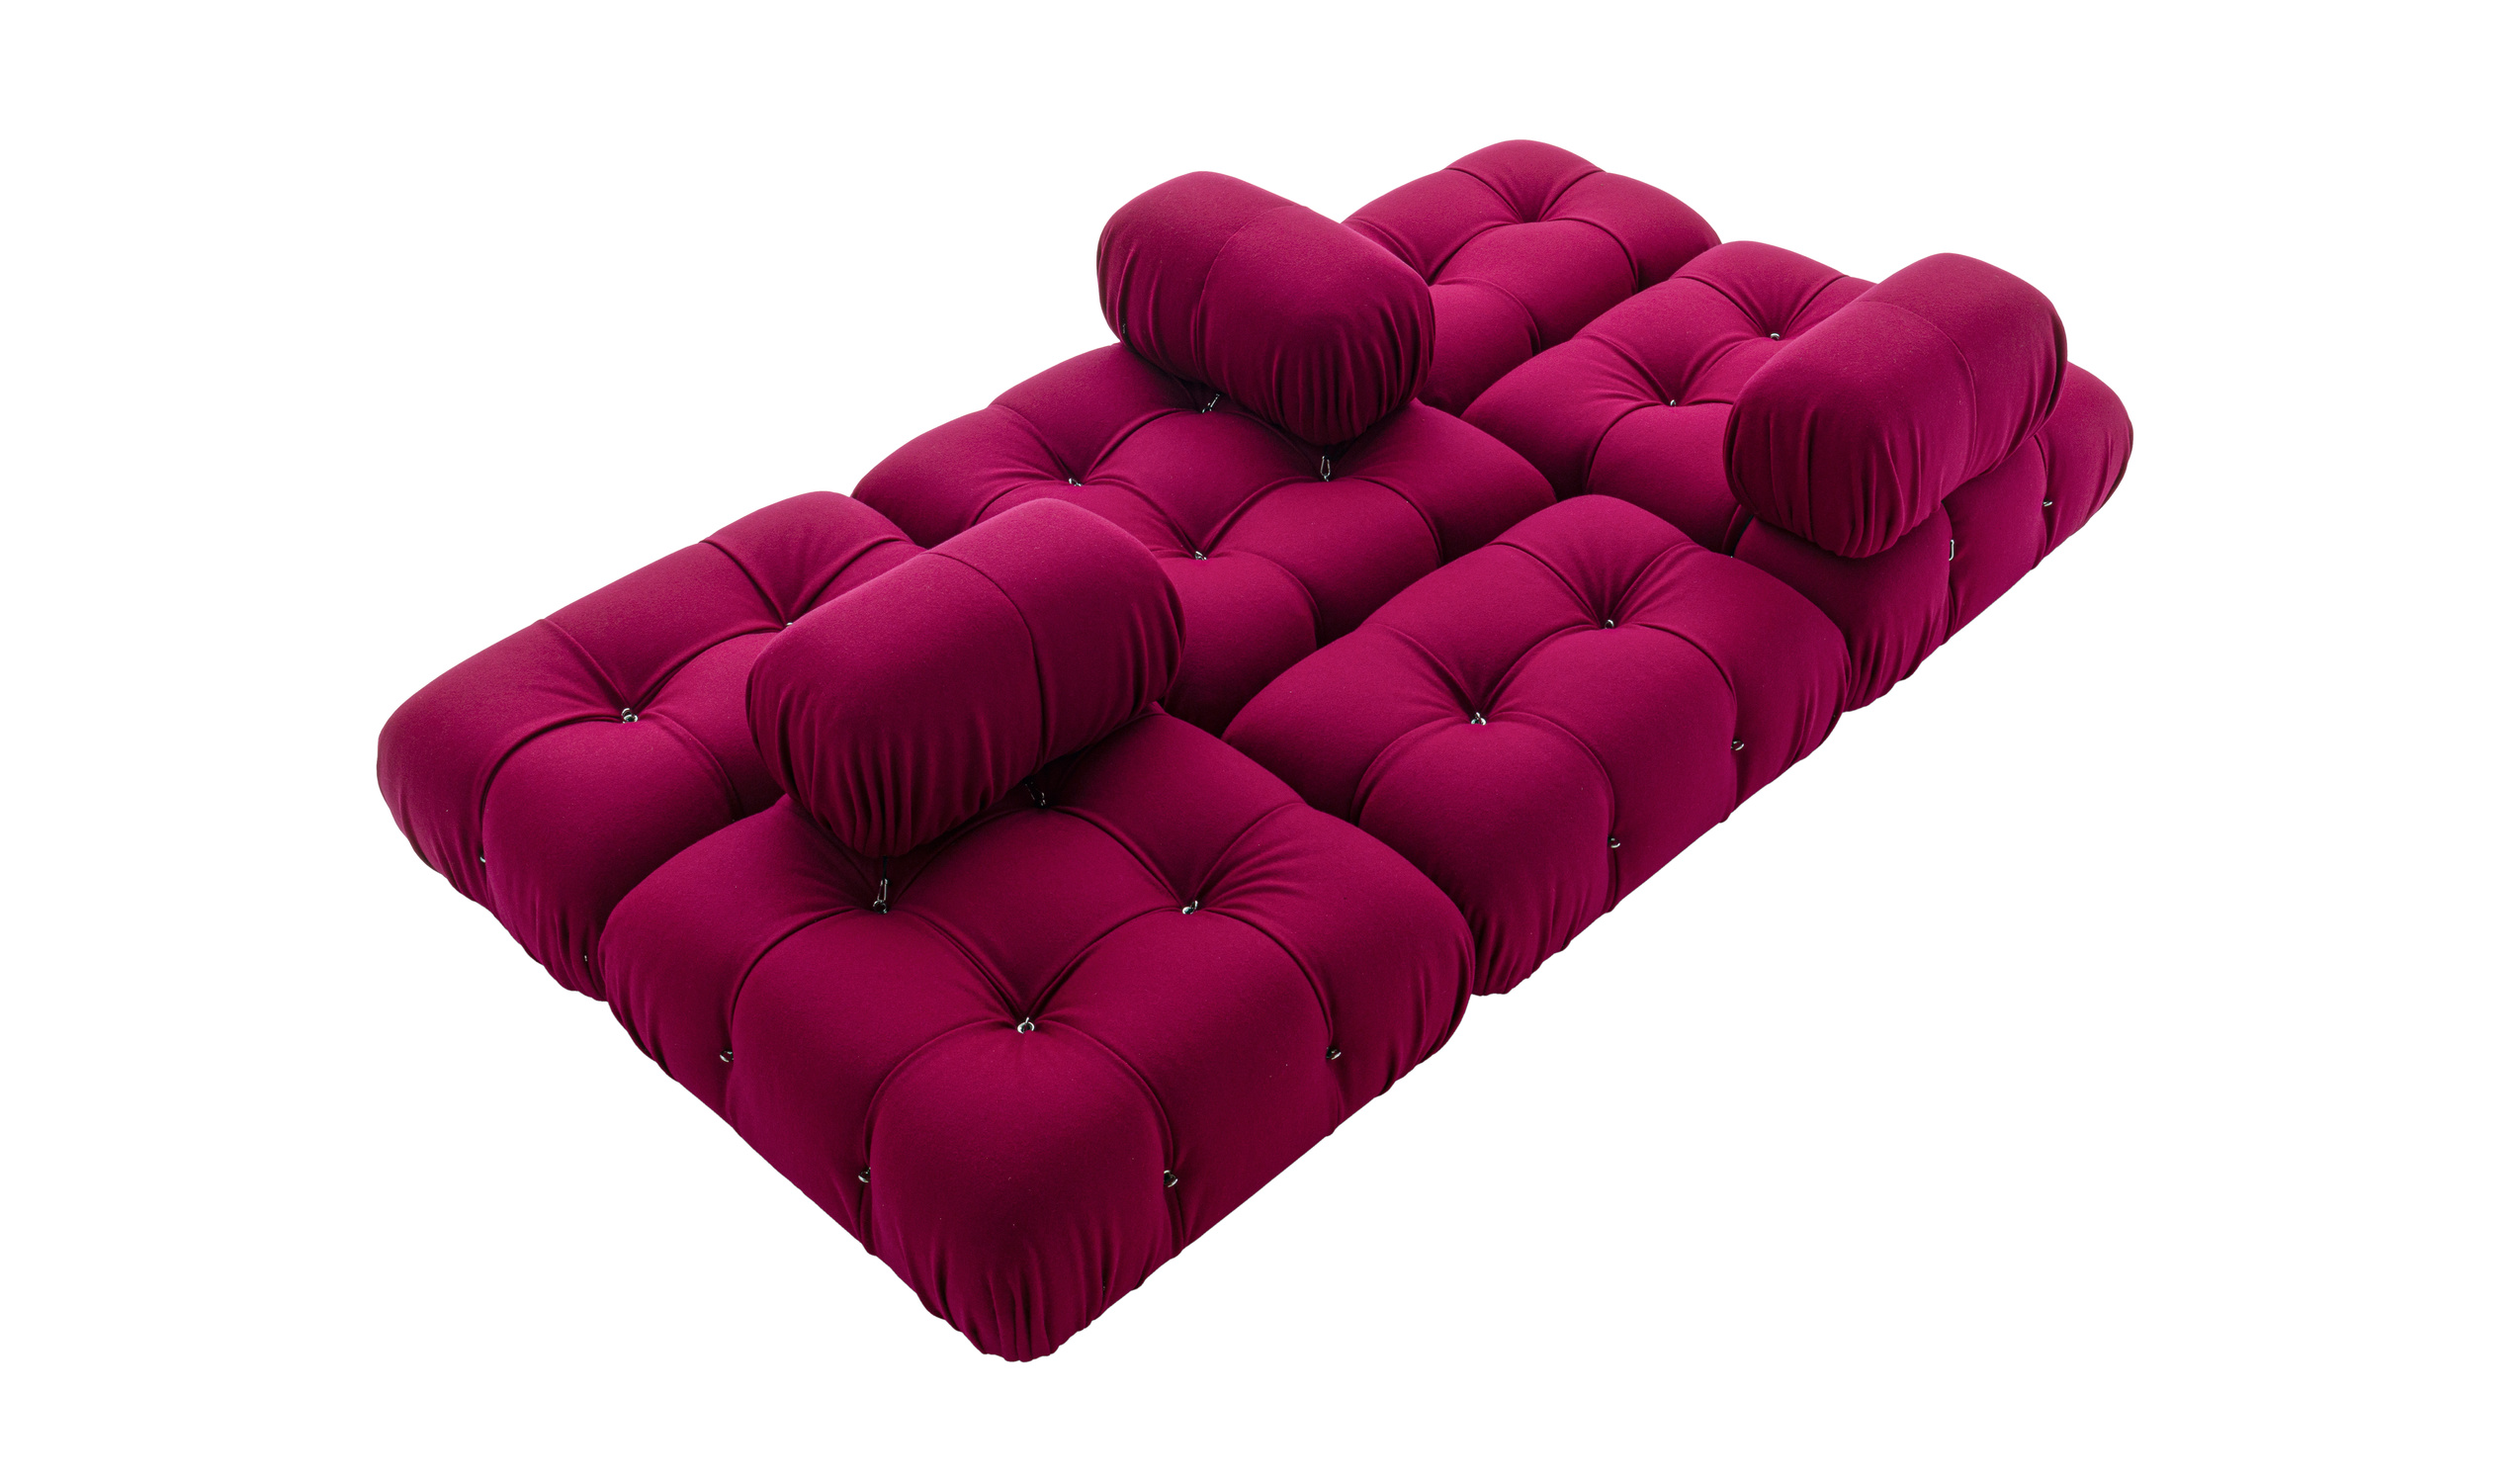 Modern designer italian sofas - Camaleonda Sofas 10